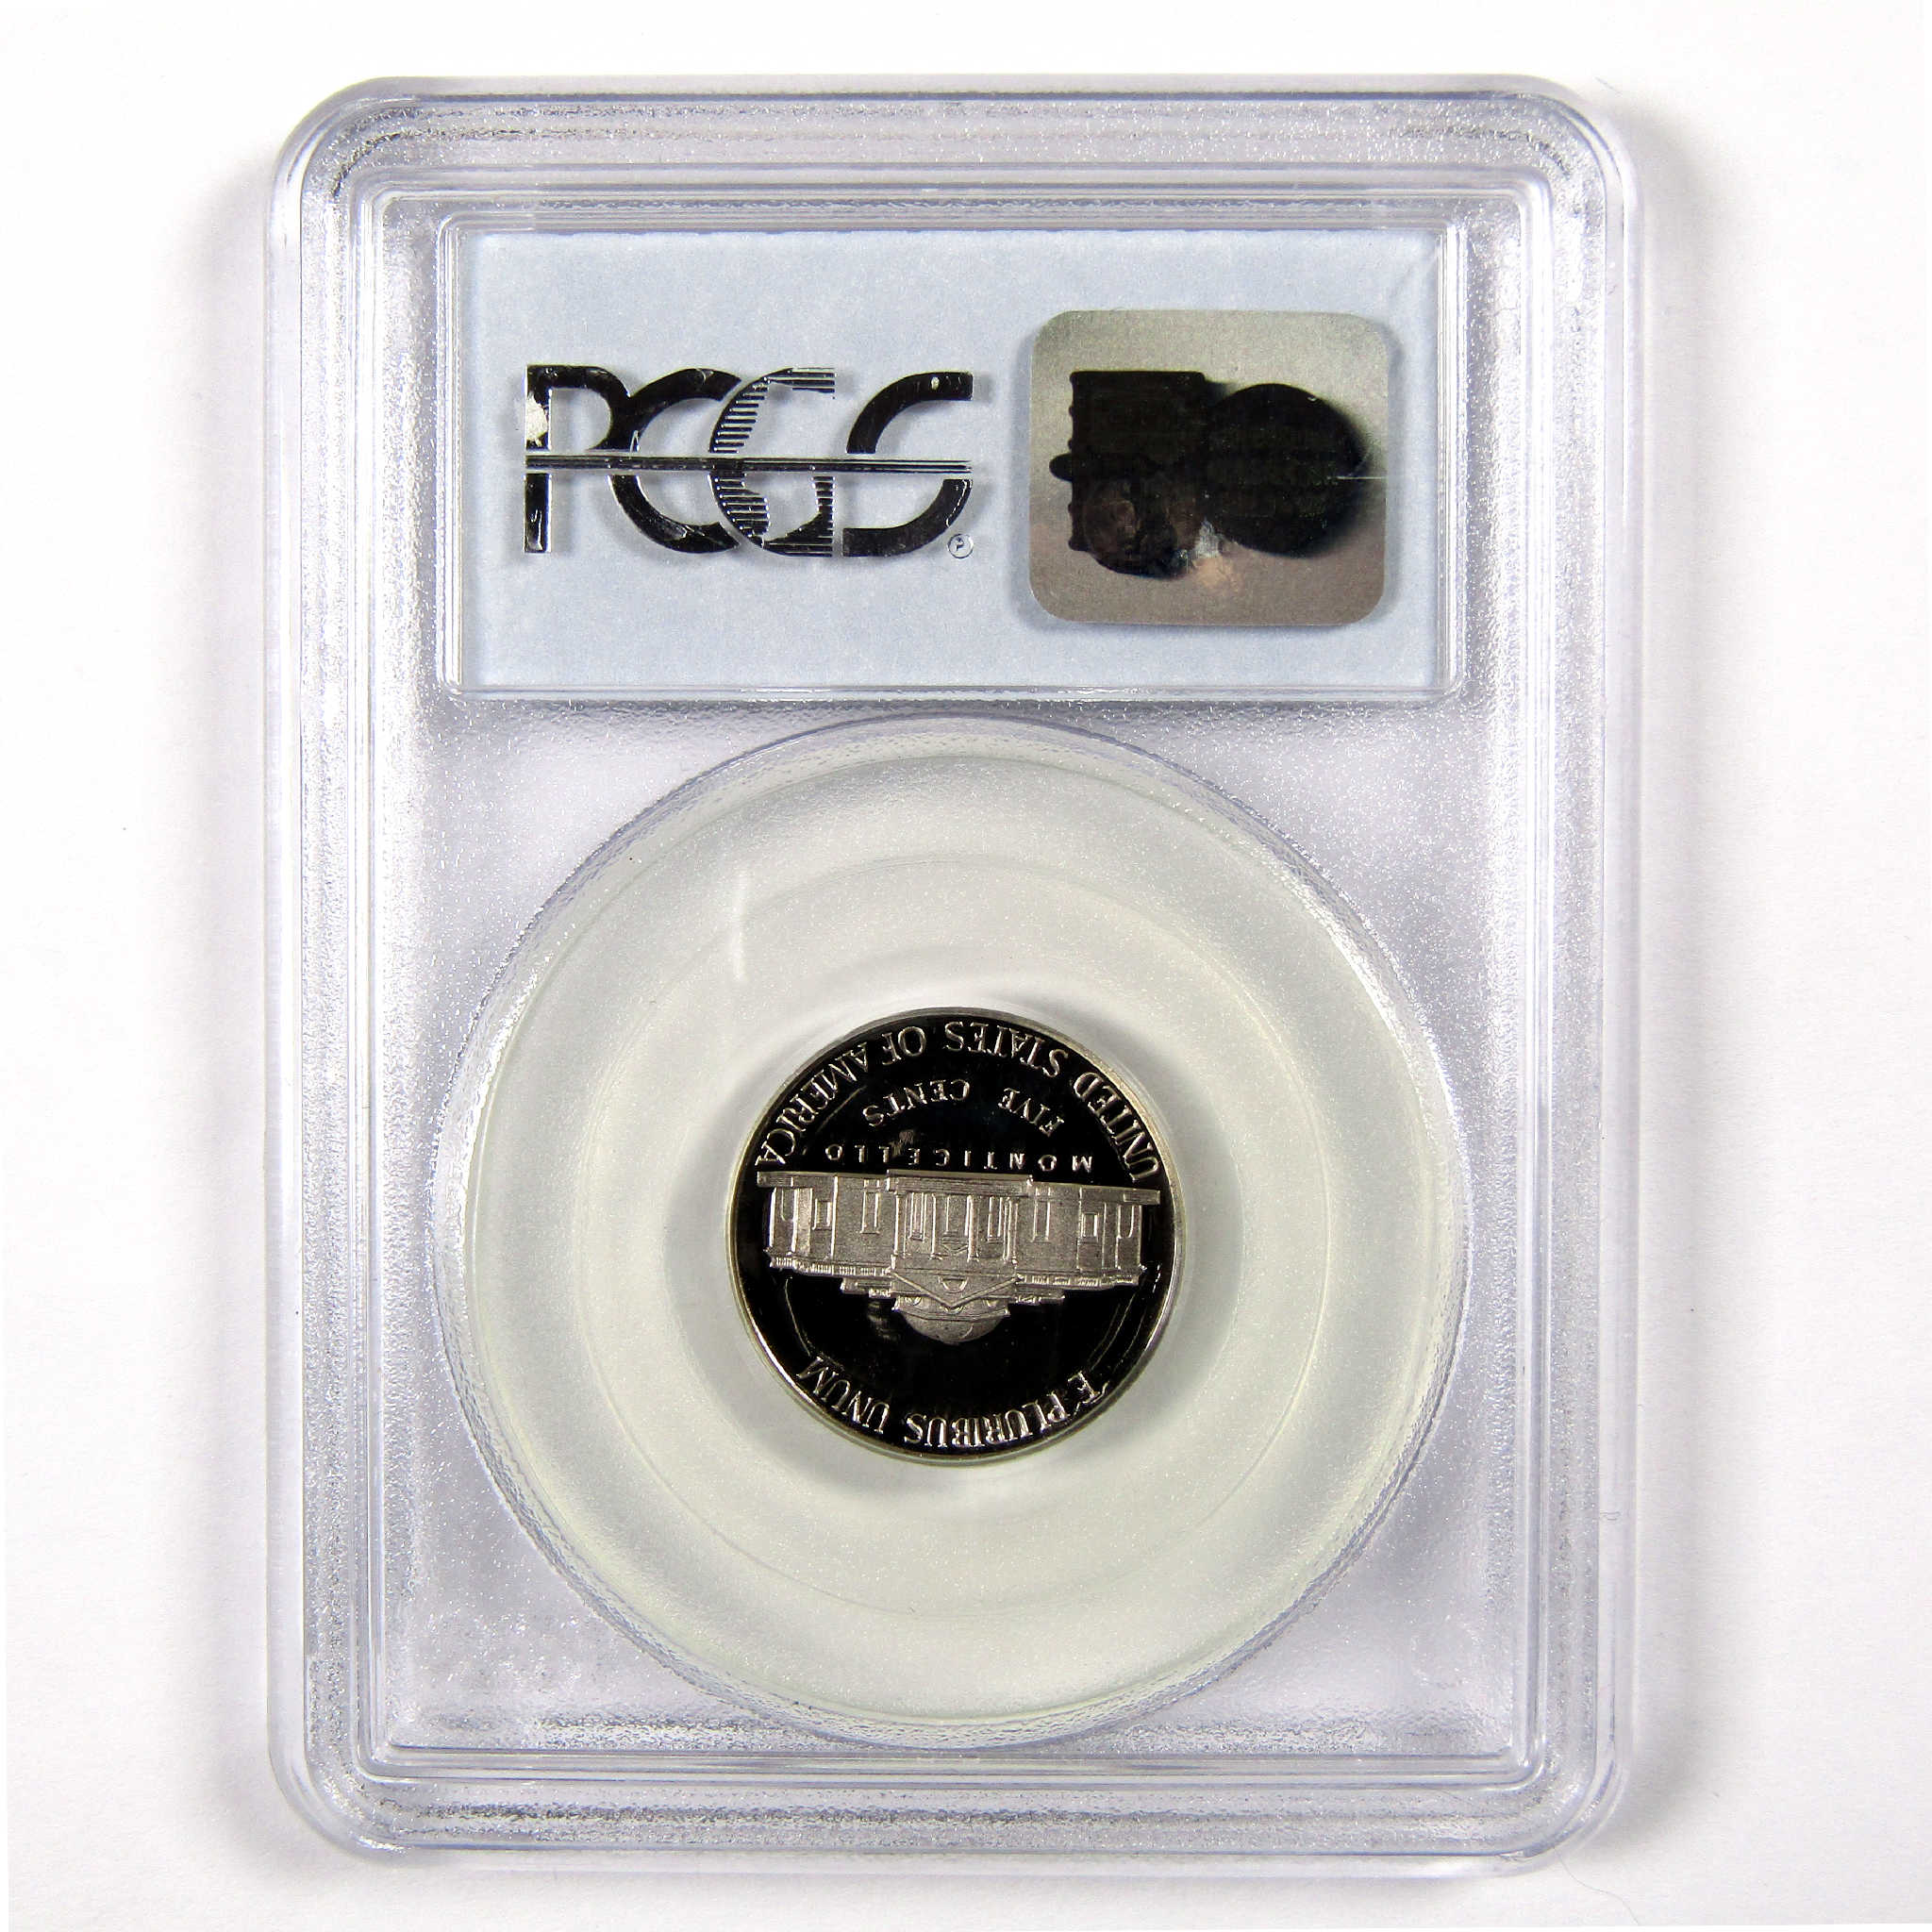 1982 S Jefferson Nickel PR 69 DCAM PCGS 5c Proof Coin SKU:CPC5048